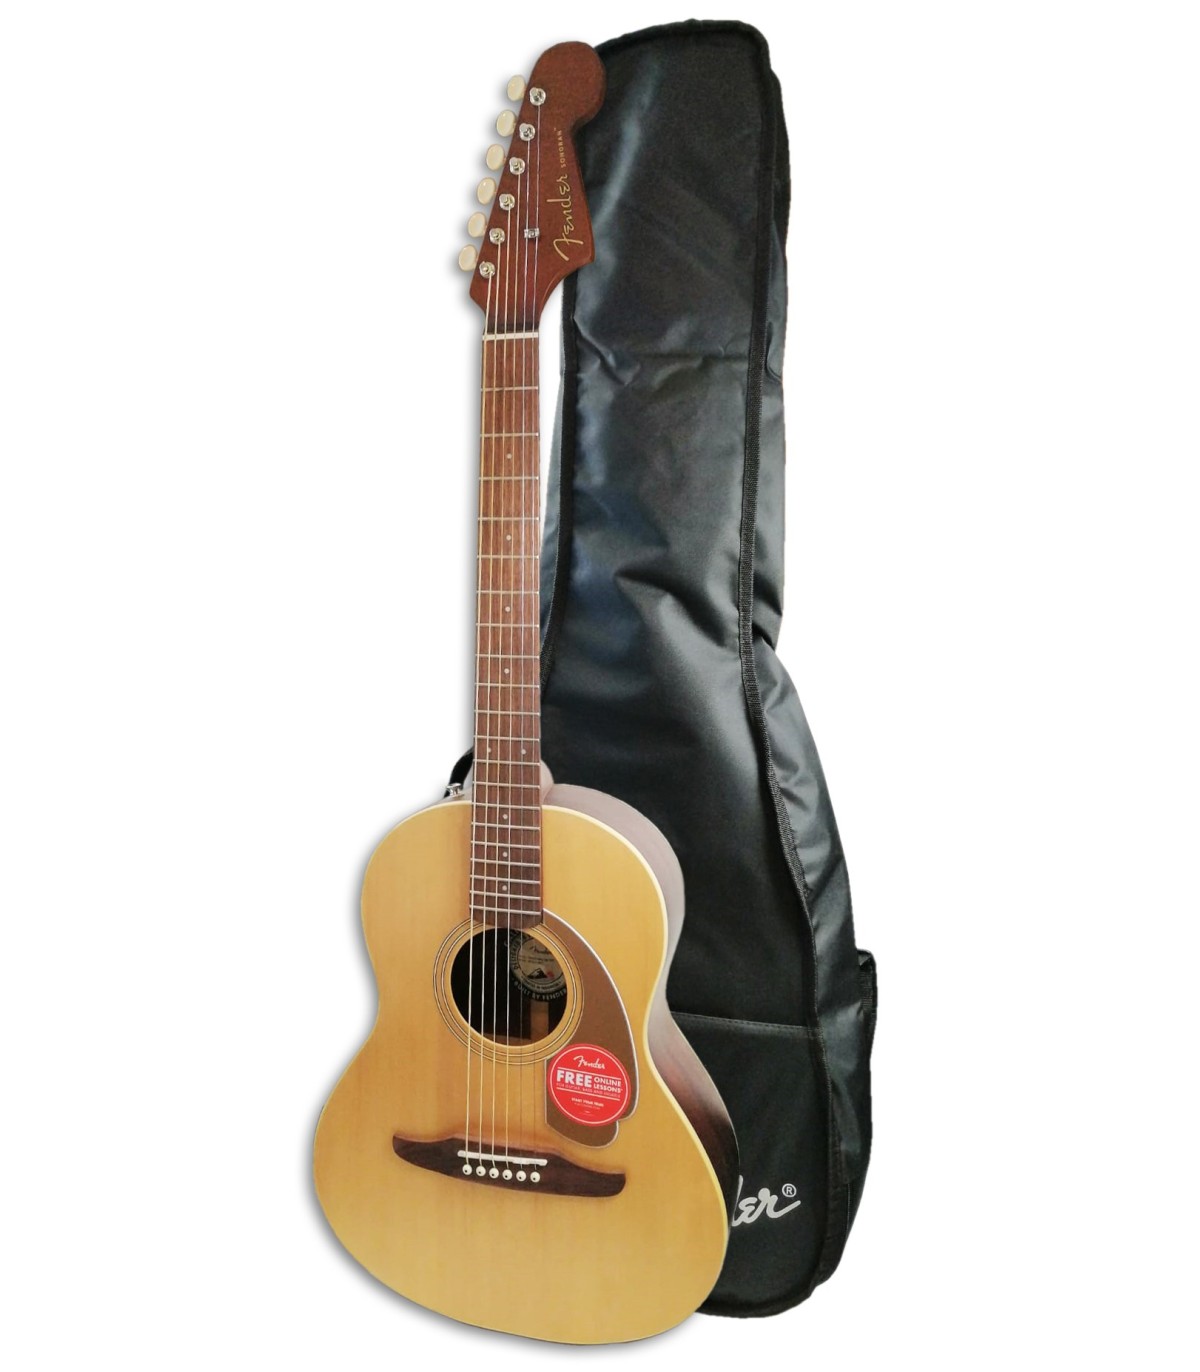 Fender 3/4 Scale Acoustic Guitar w/ Bag - Sunburst - 885978847914